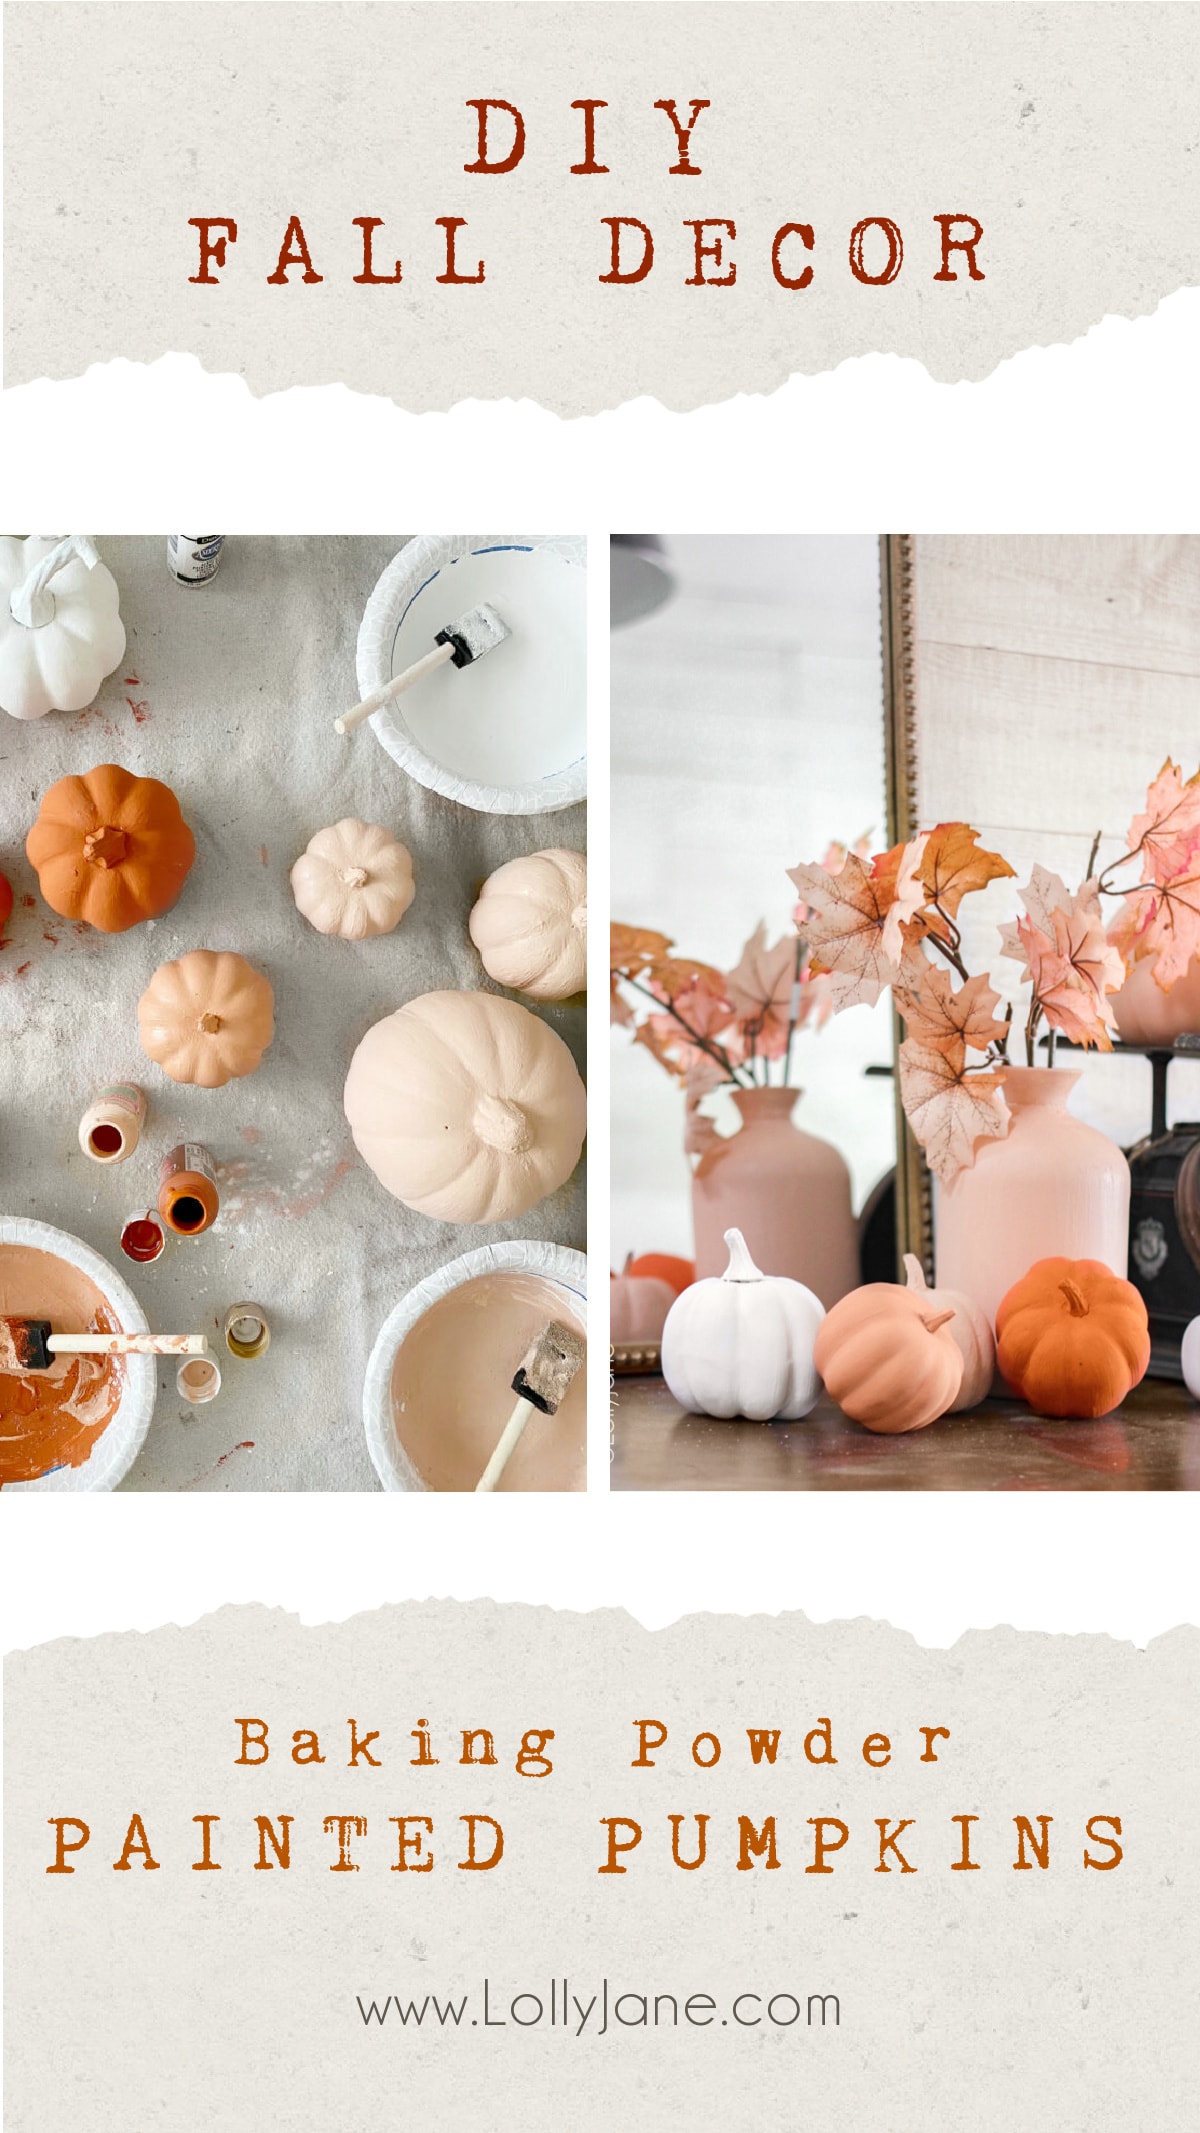 DIY Baking Powder Painted Pumpkins - Lolly Jane